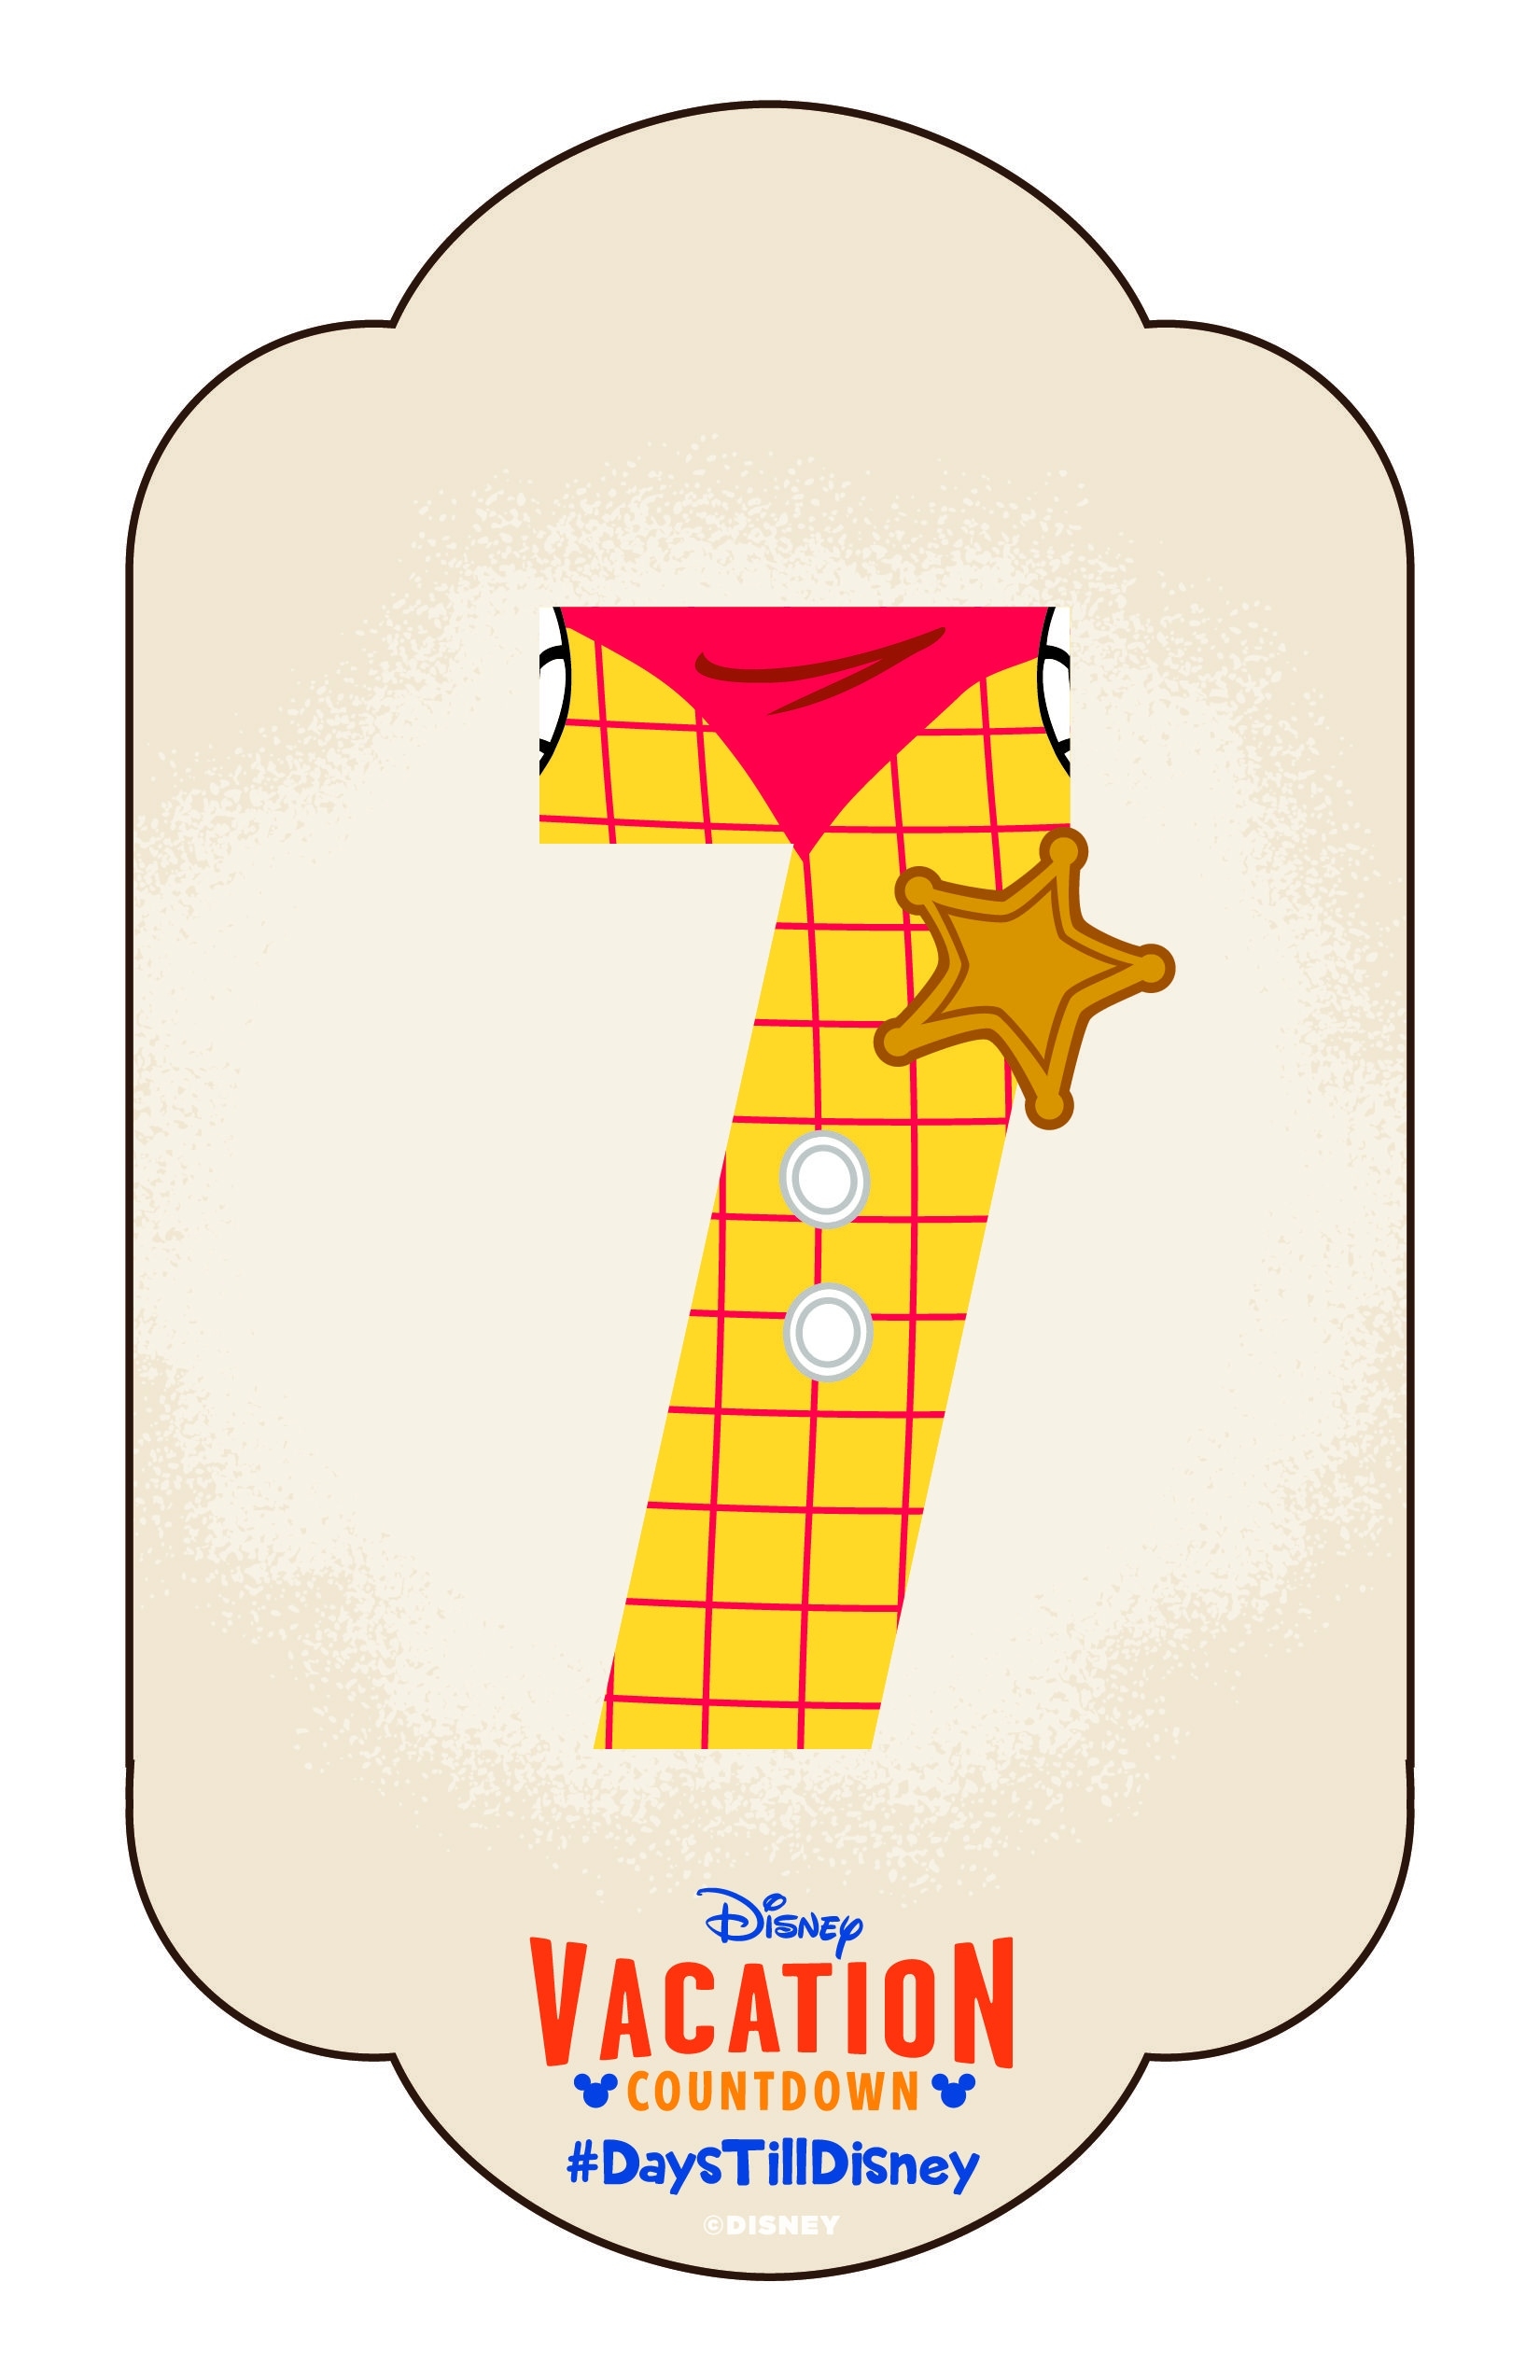 Diy: Create-Your-Own Walt Disney World Vacation Countdown Perky Disney Vacation Club Countdown Calendar